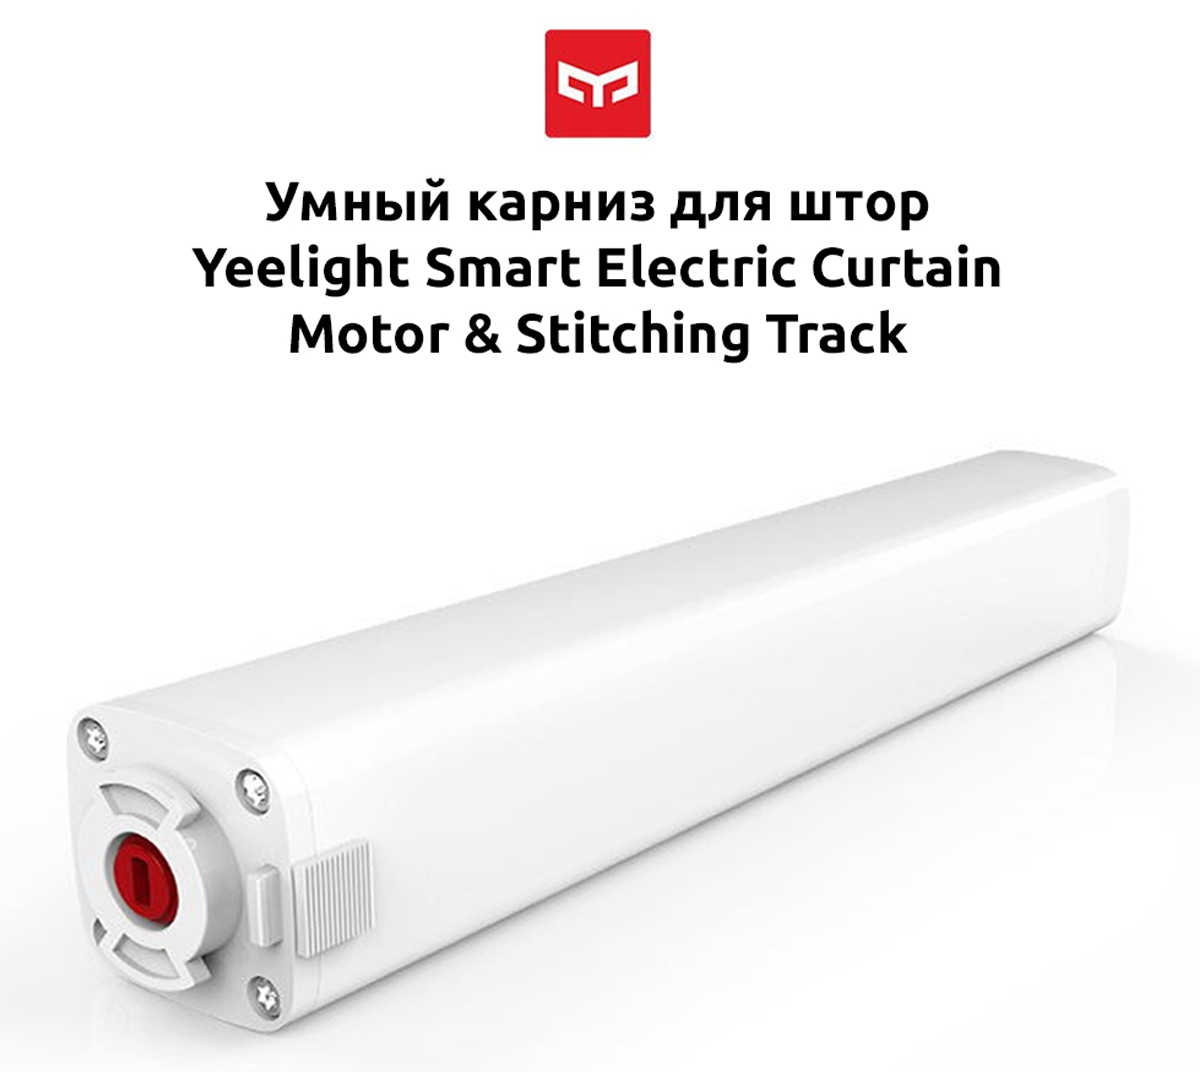 Умный карниз для штор Yeelight Smart Electric Curtain Motor & Stitching Track (YLDJ001)